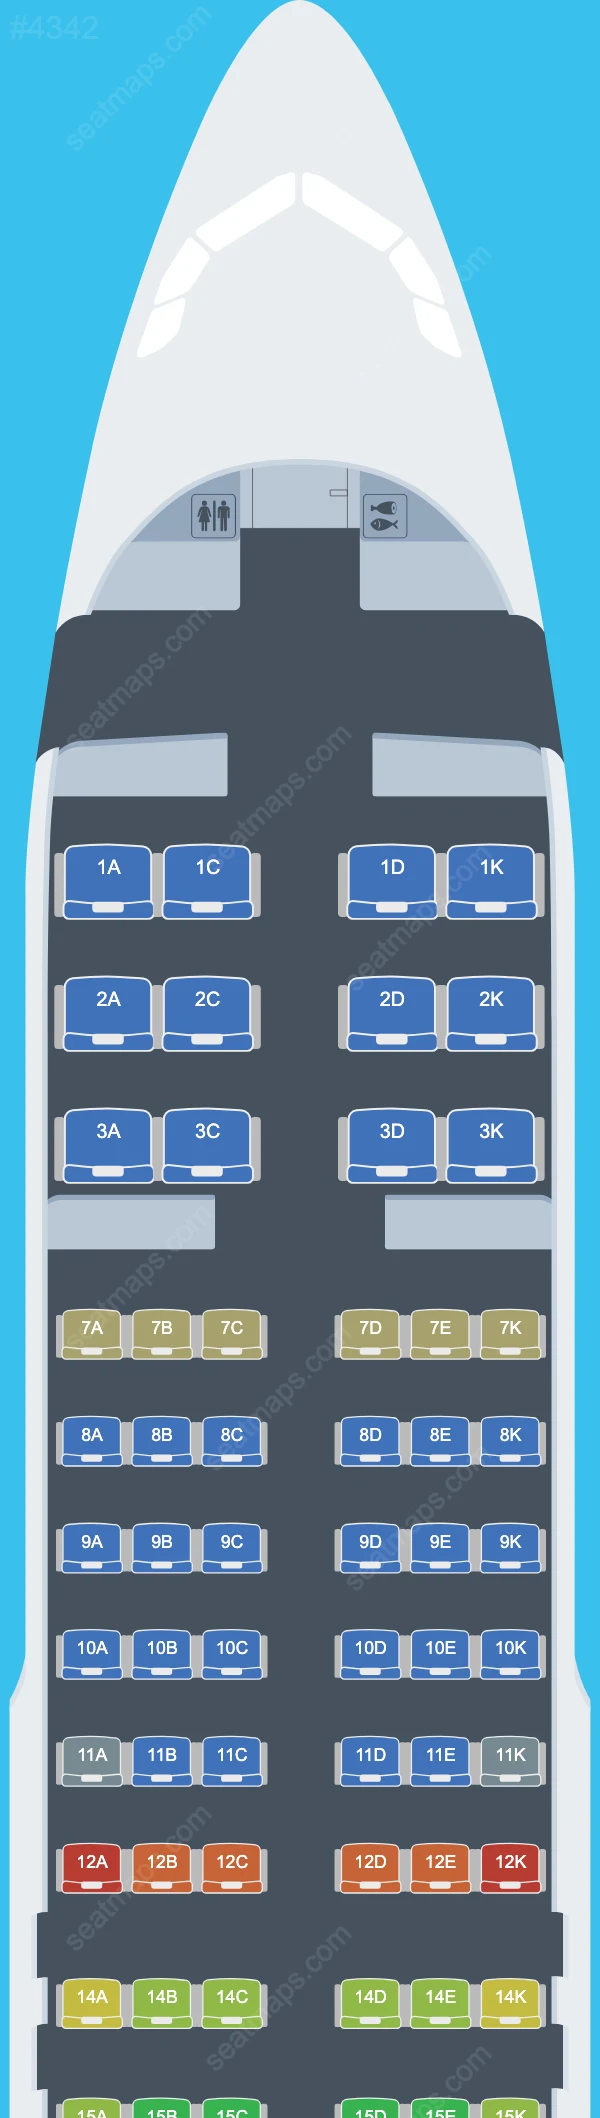 Схема салона Avianca Costa Rica в самолете Airbus A320 A320-200